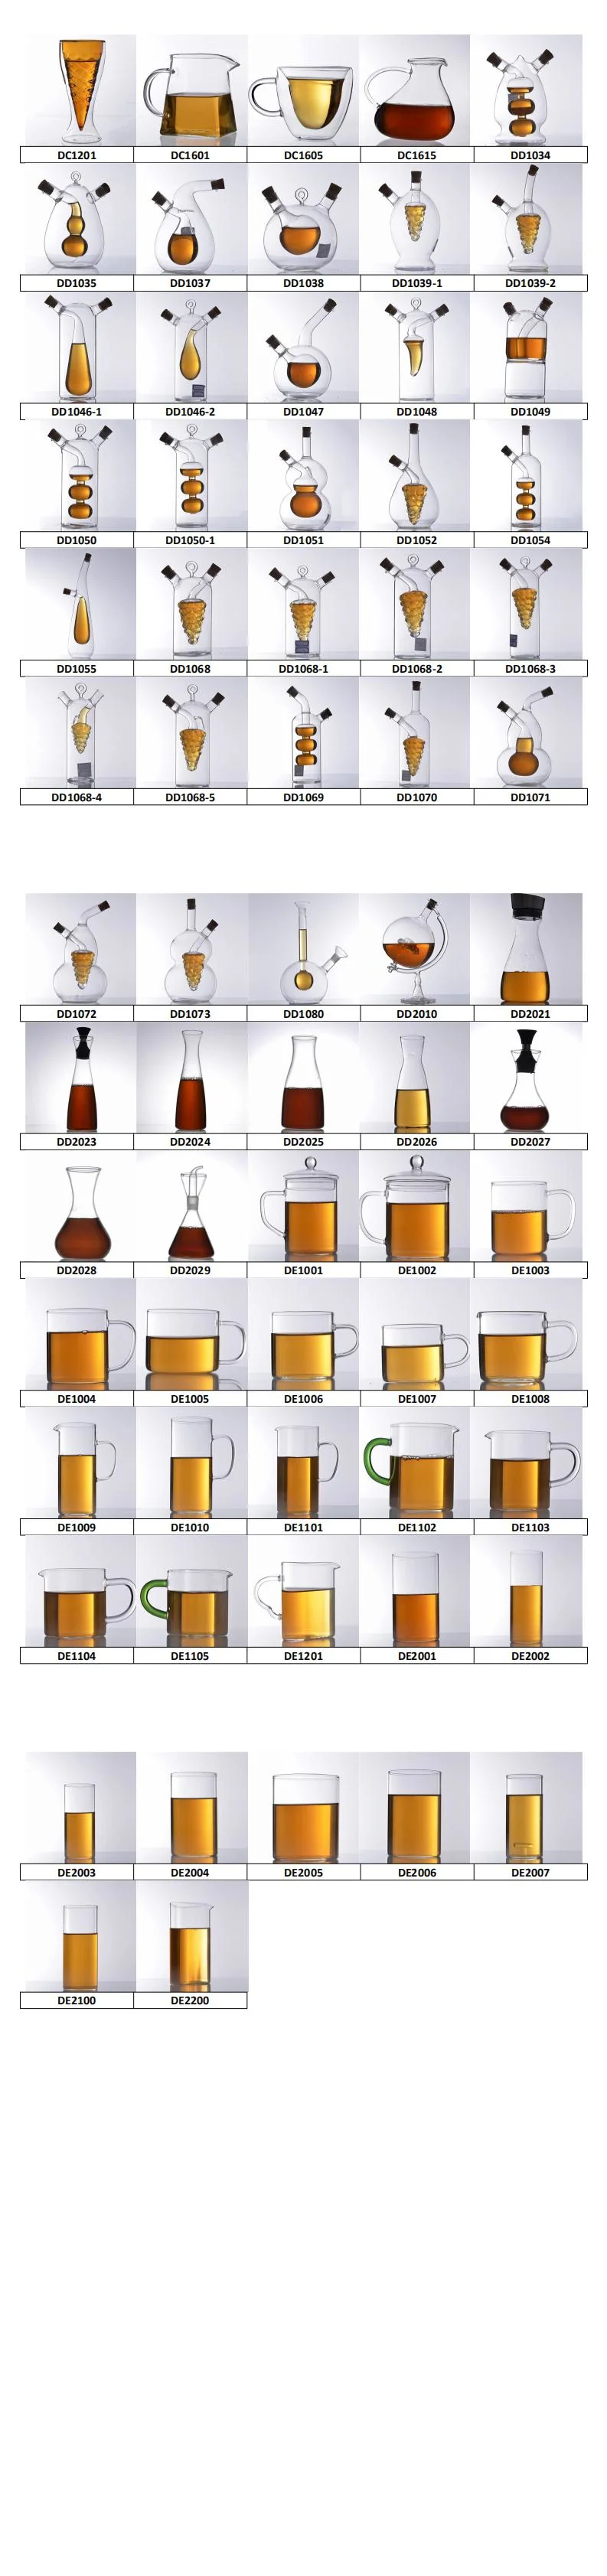 DD1037 Cooking Oil and Vinegar Glass Dispenser Storage Bottles